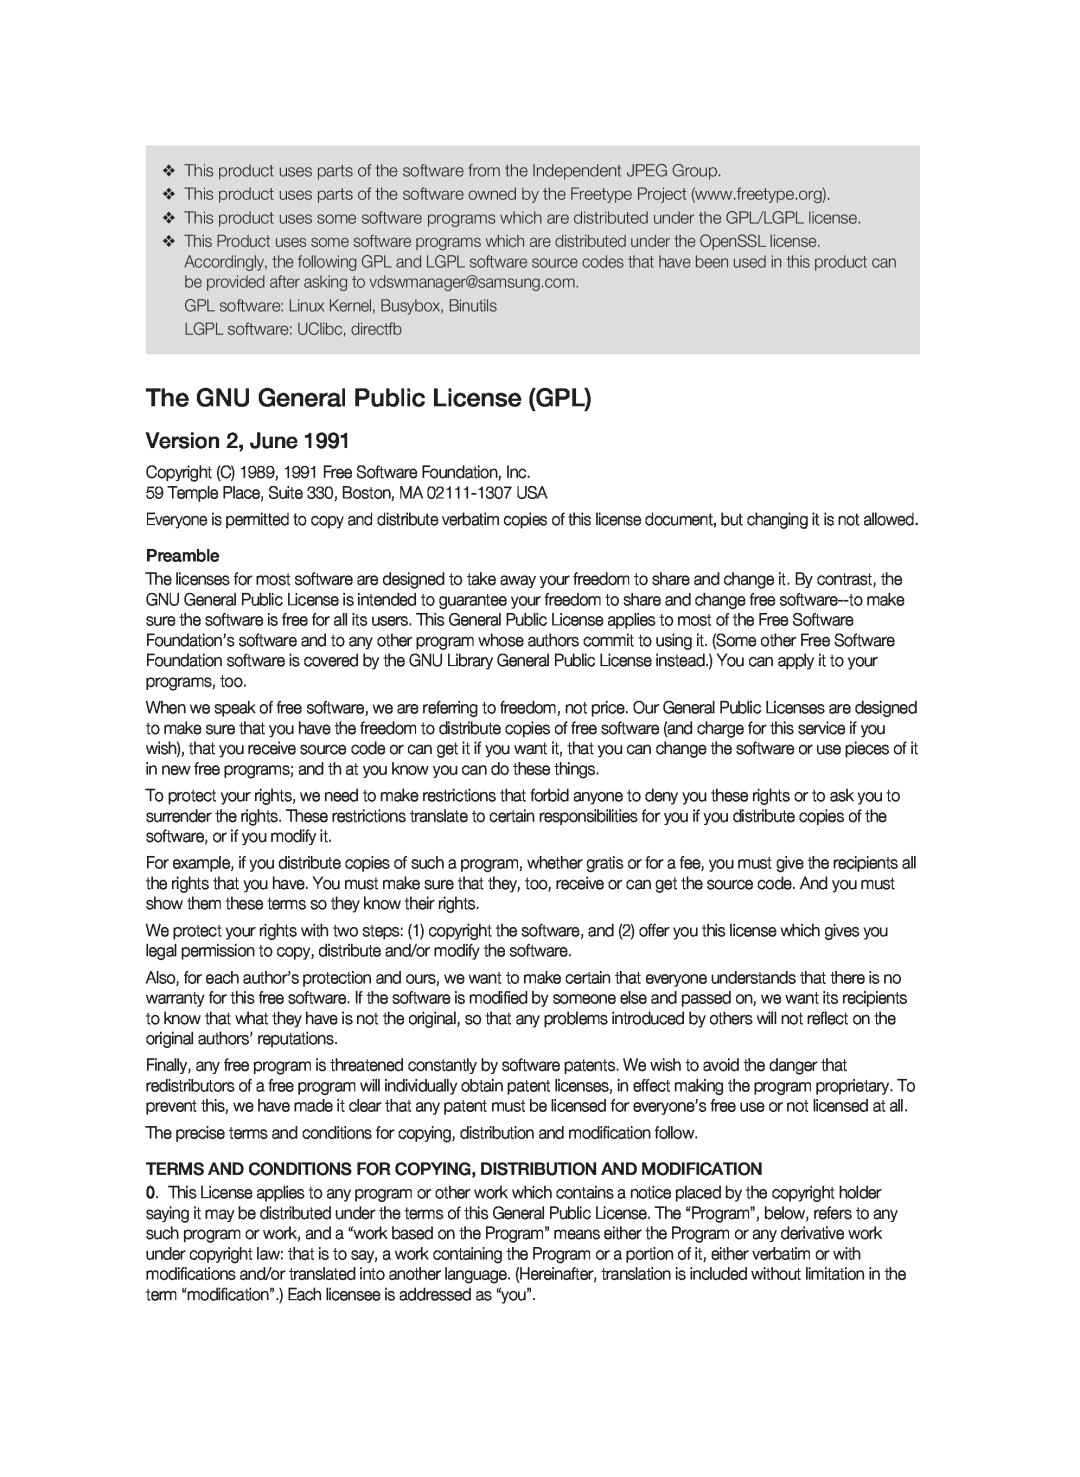 Samsung BD-P1580/EDC manual The GNU General Public License GPL, Version 2, June 